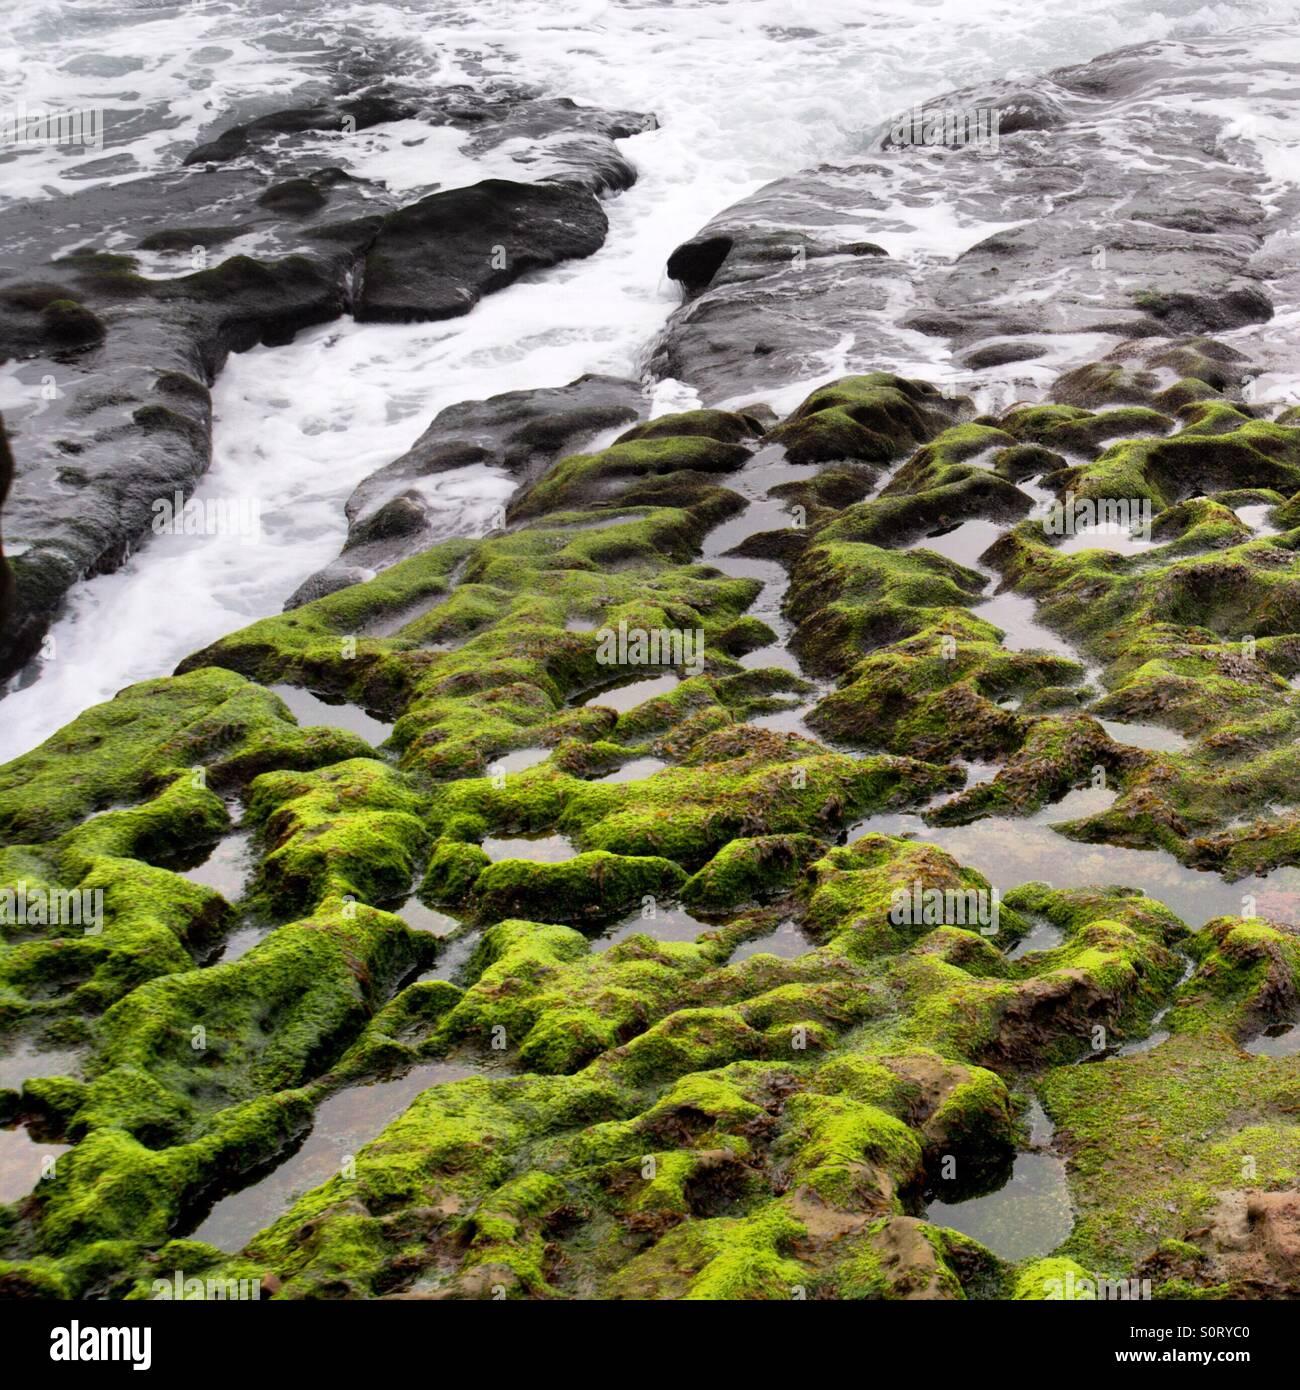 vibrant-lime-green-moss-over-beach-rocks-in-la-jolla-ca-S0RYC0.jpg